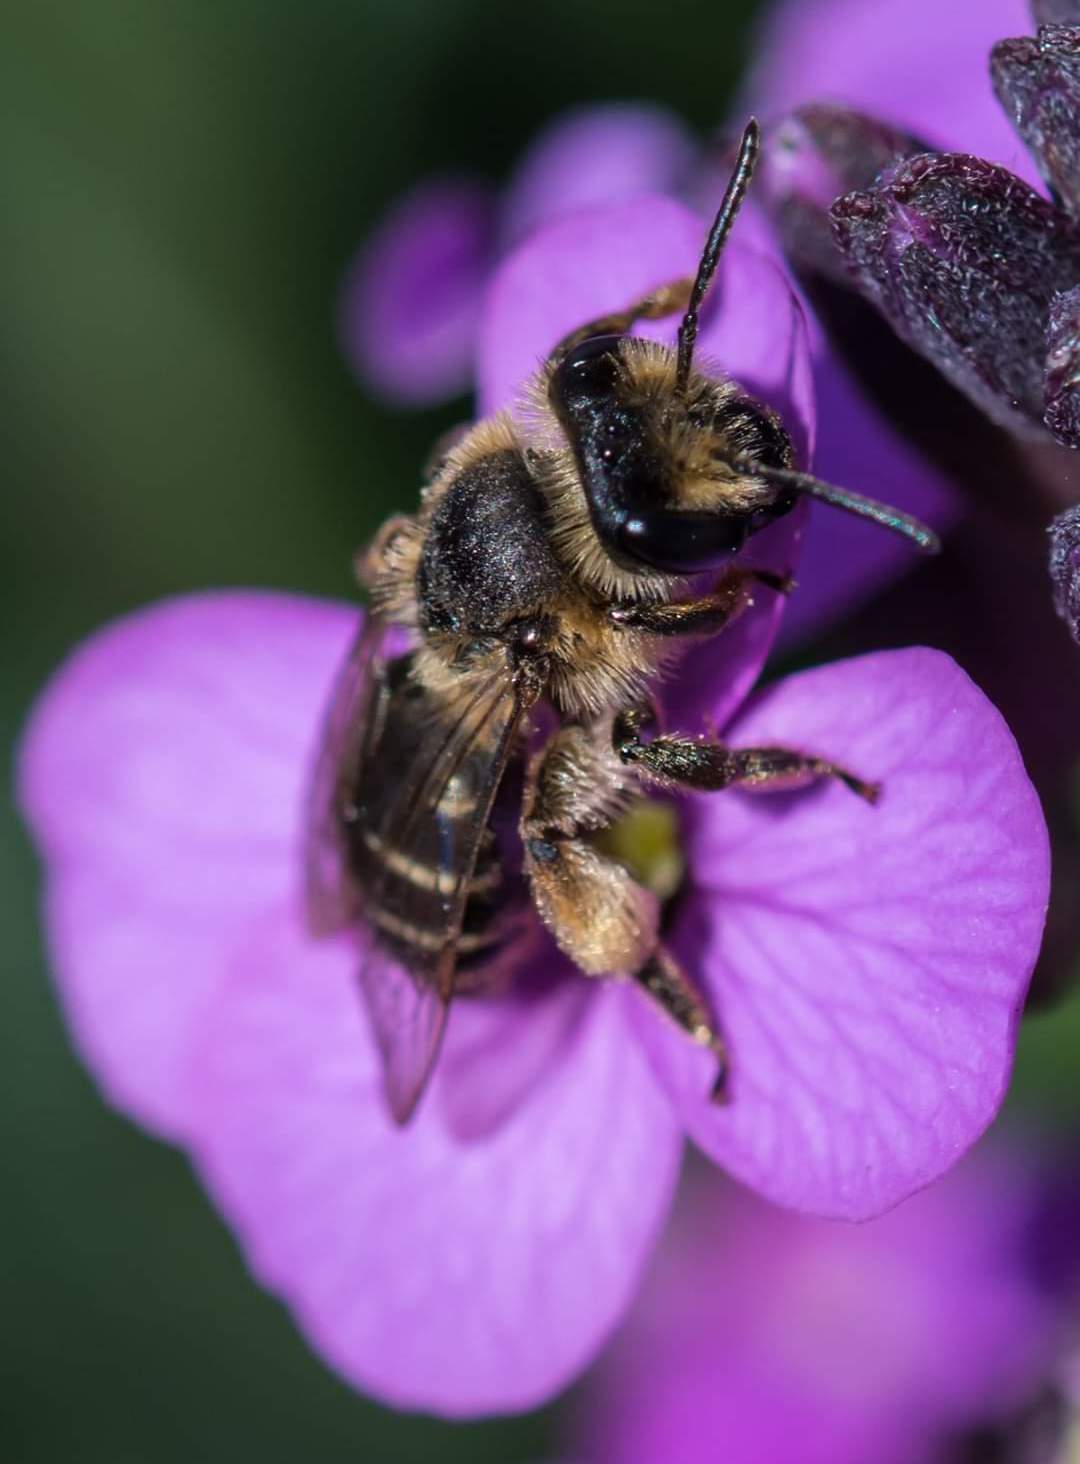 Mining bee on a flower